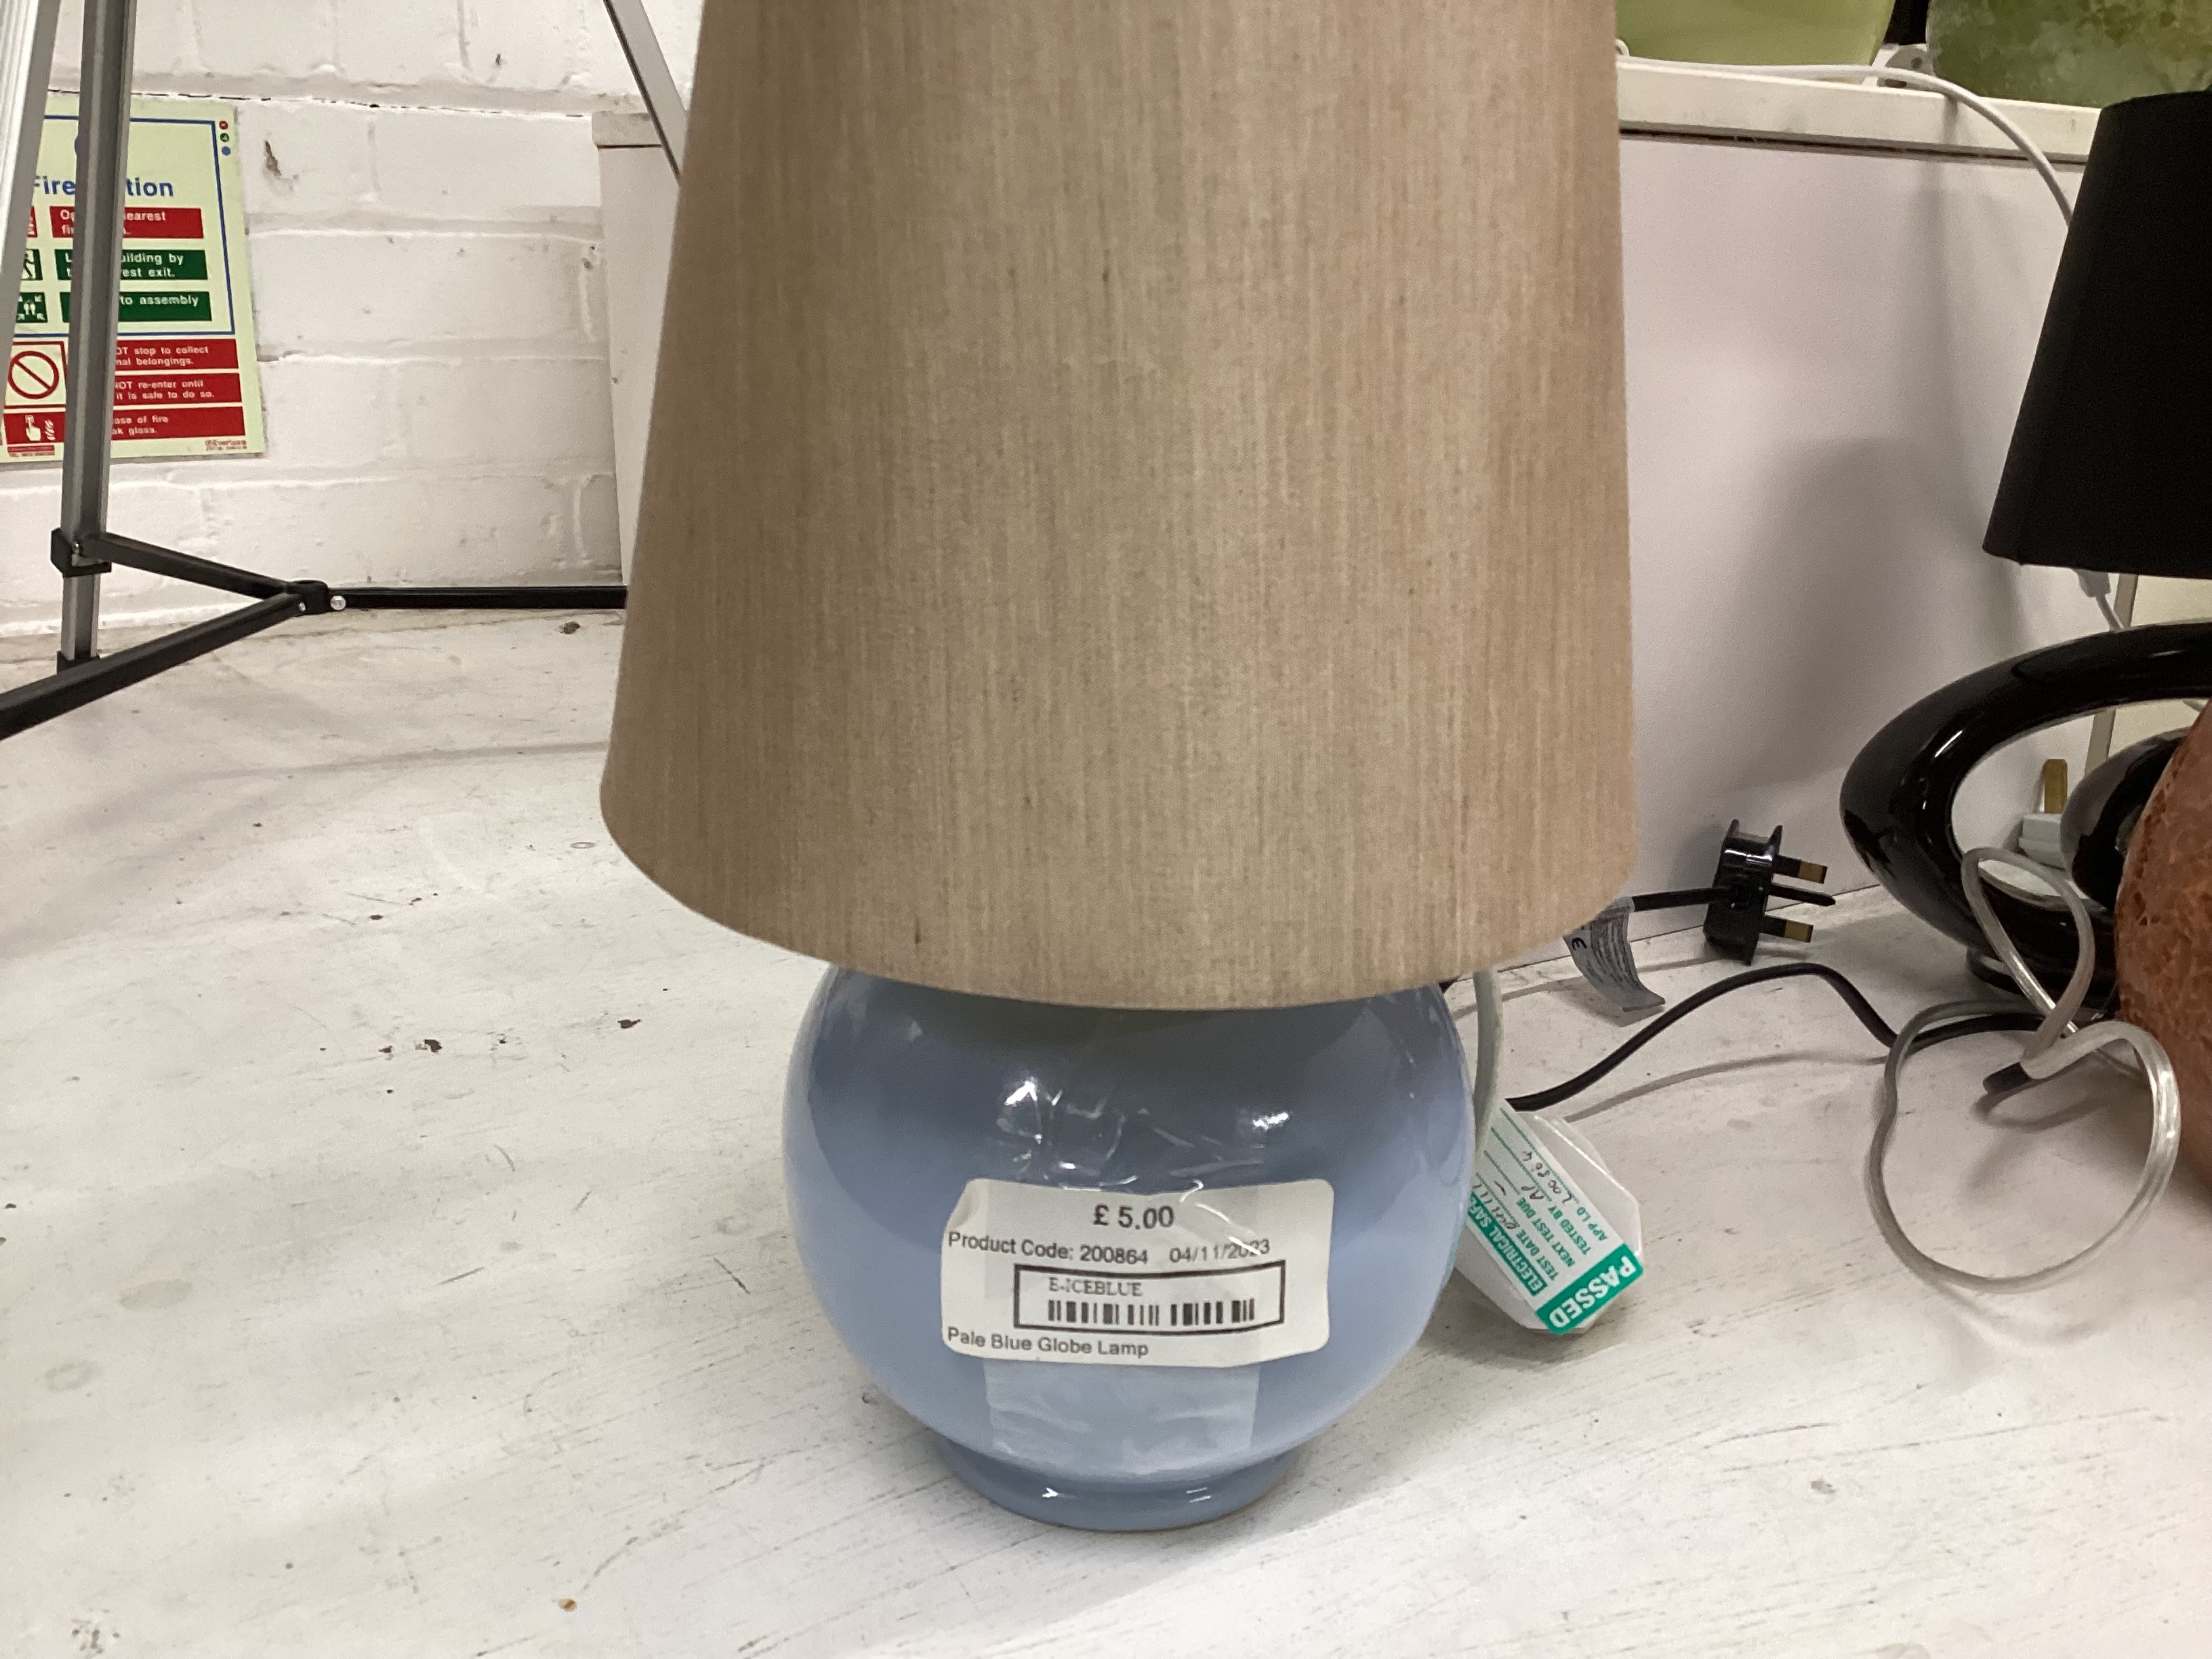 Small Pale Blue Globe Lamp